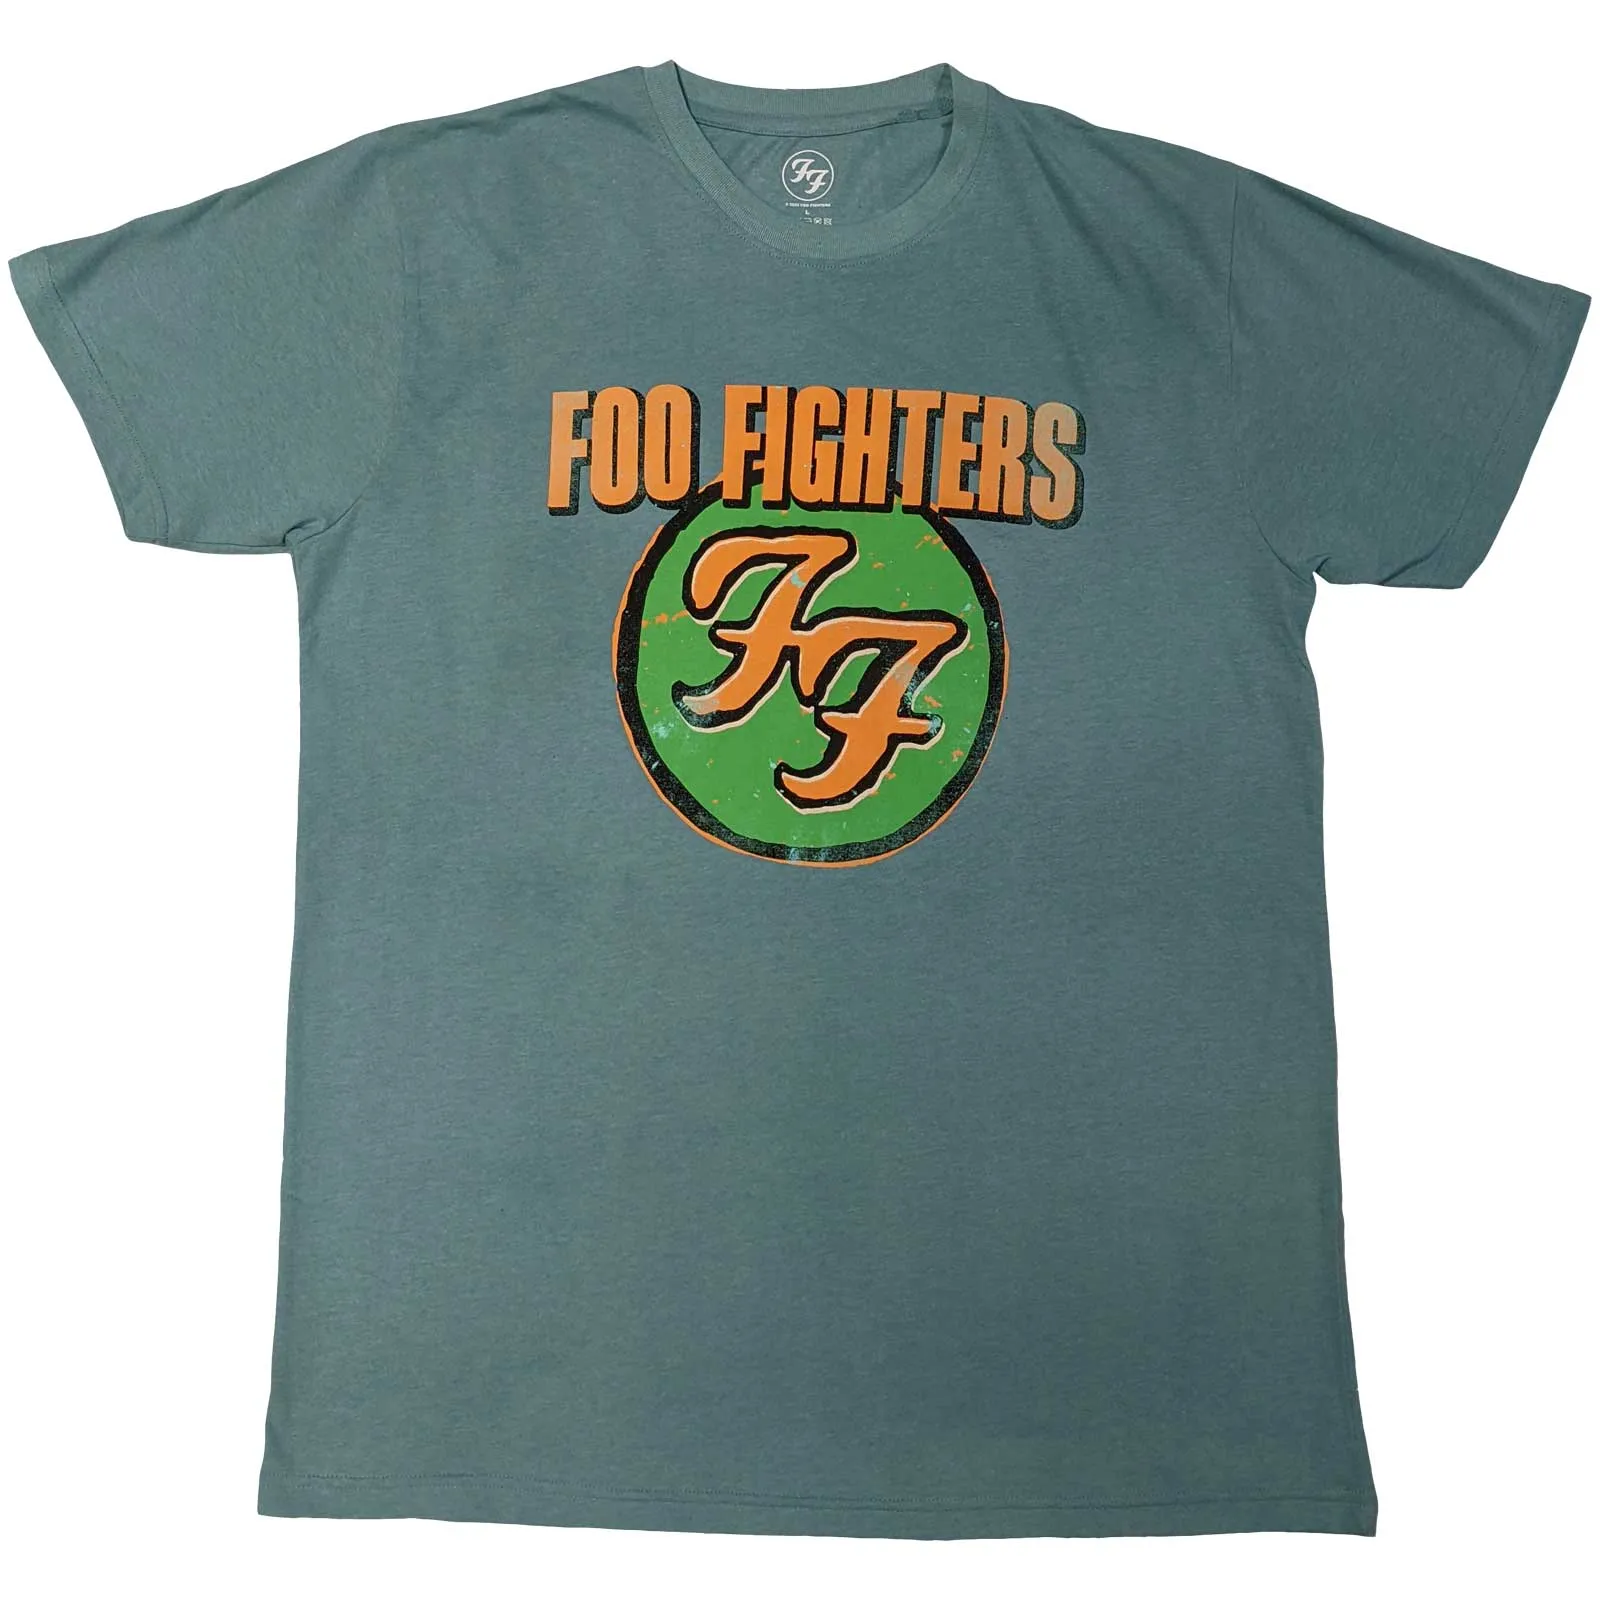 Foo Fighters - Unisex T-Shirt Graff Eco Friendly artwork